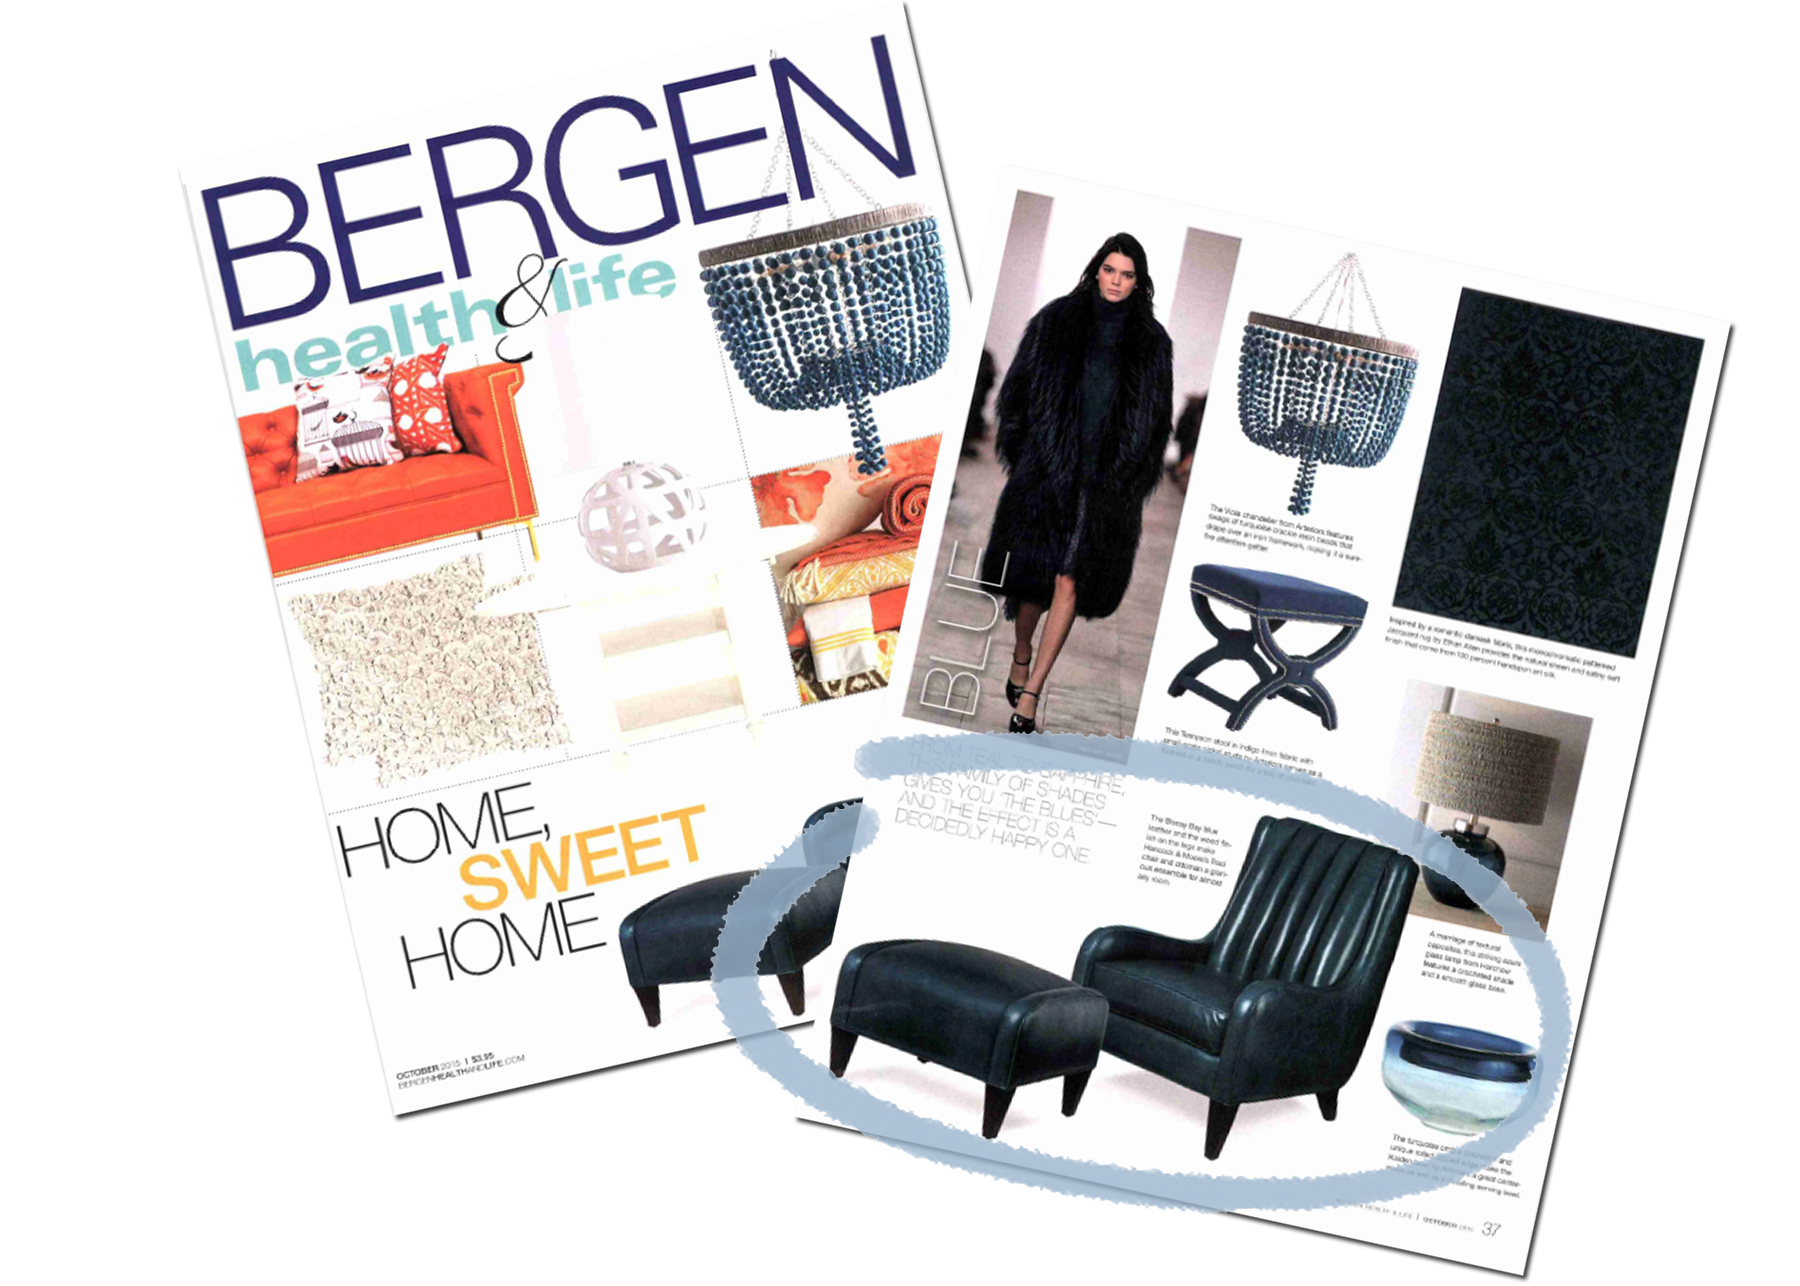  Bergen HL Oct 2015 - Traci Chair 